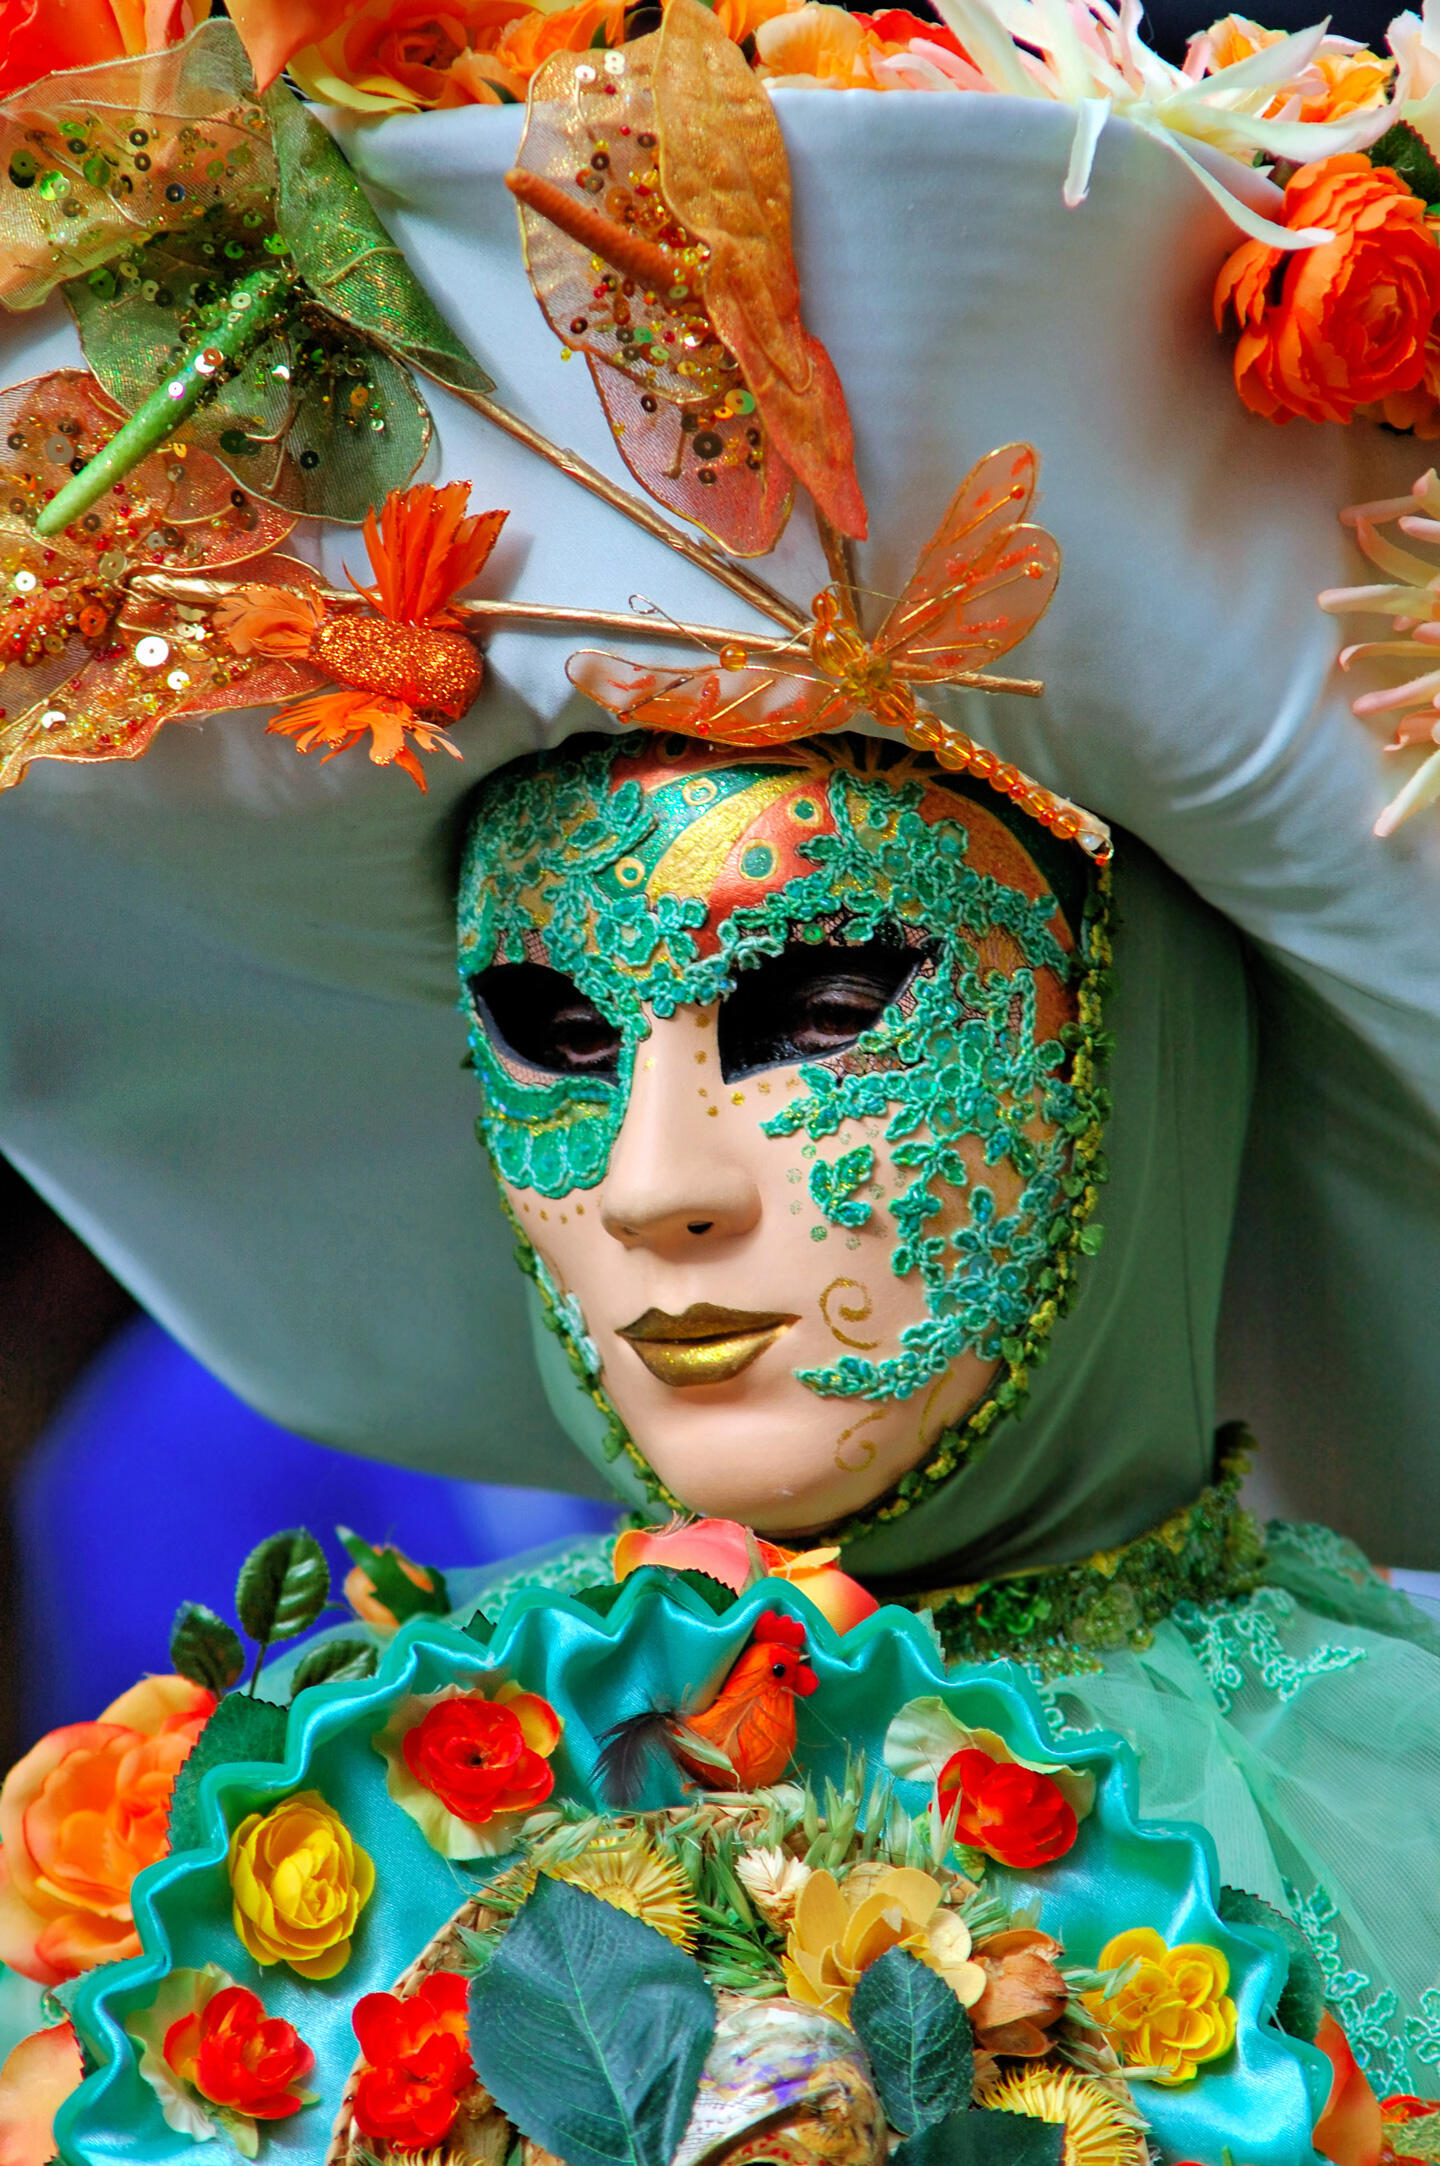 Participant in ornate green and gold mask adorned with sequins and floral decorations at La Fête des Vendanges de Montmartre.